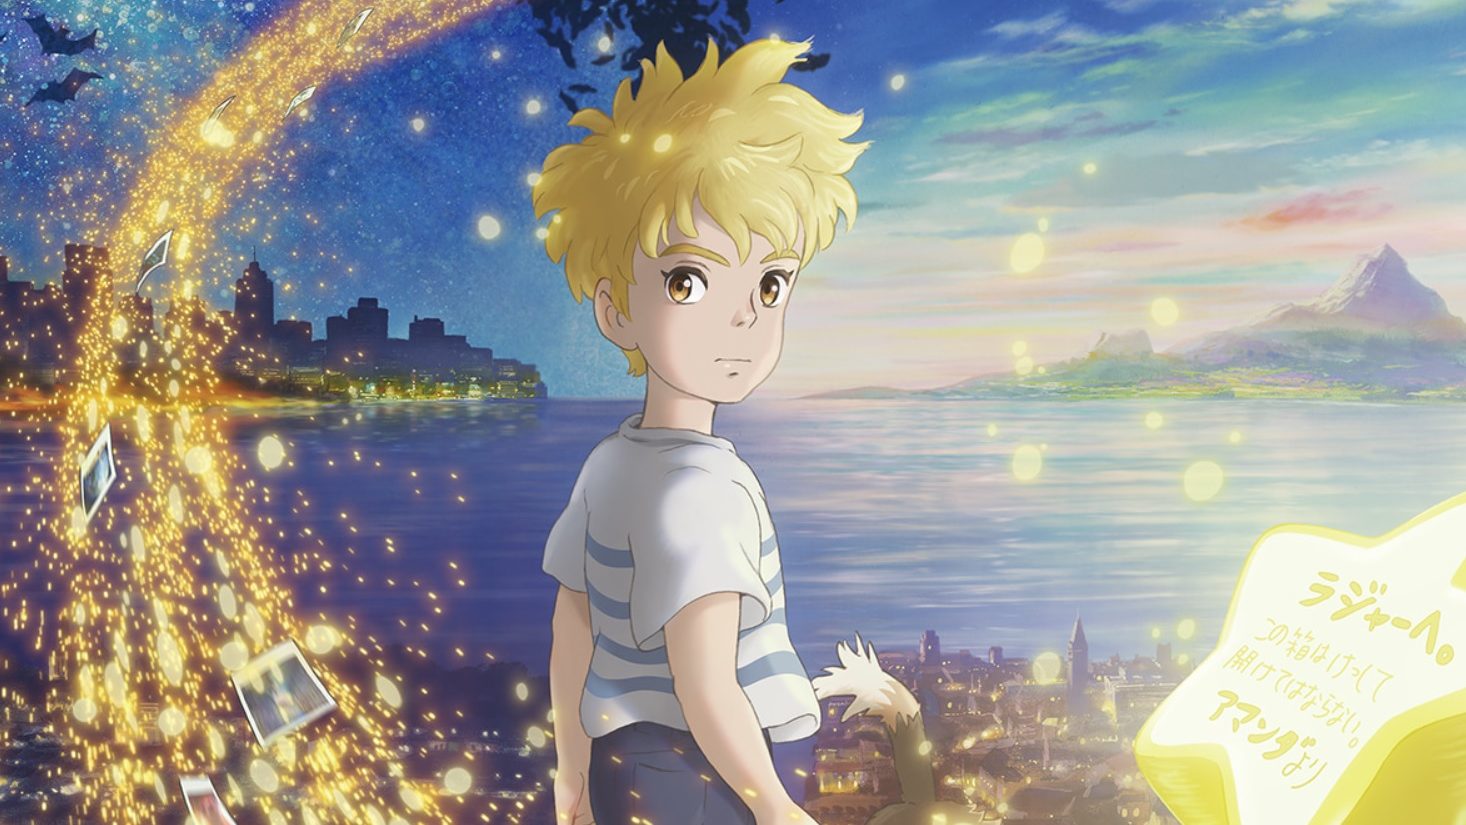 The Imaginary Trailer Previews Studio Ponoc's New Anime Movie